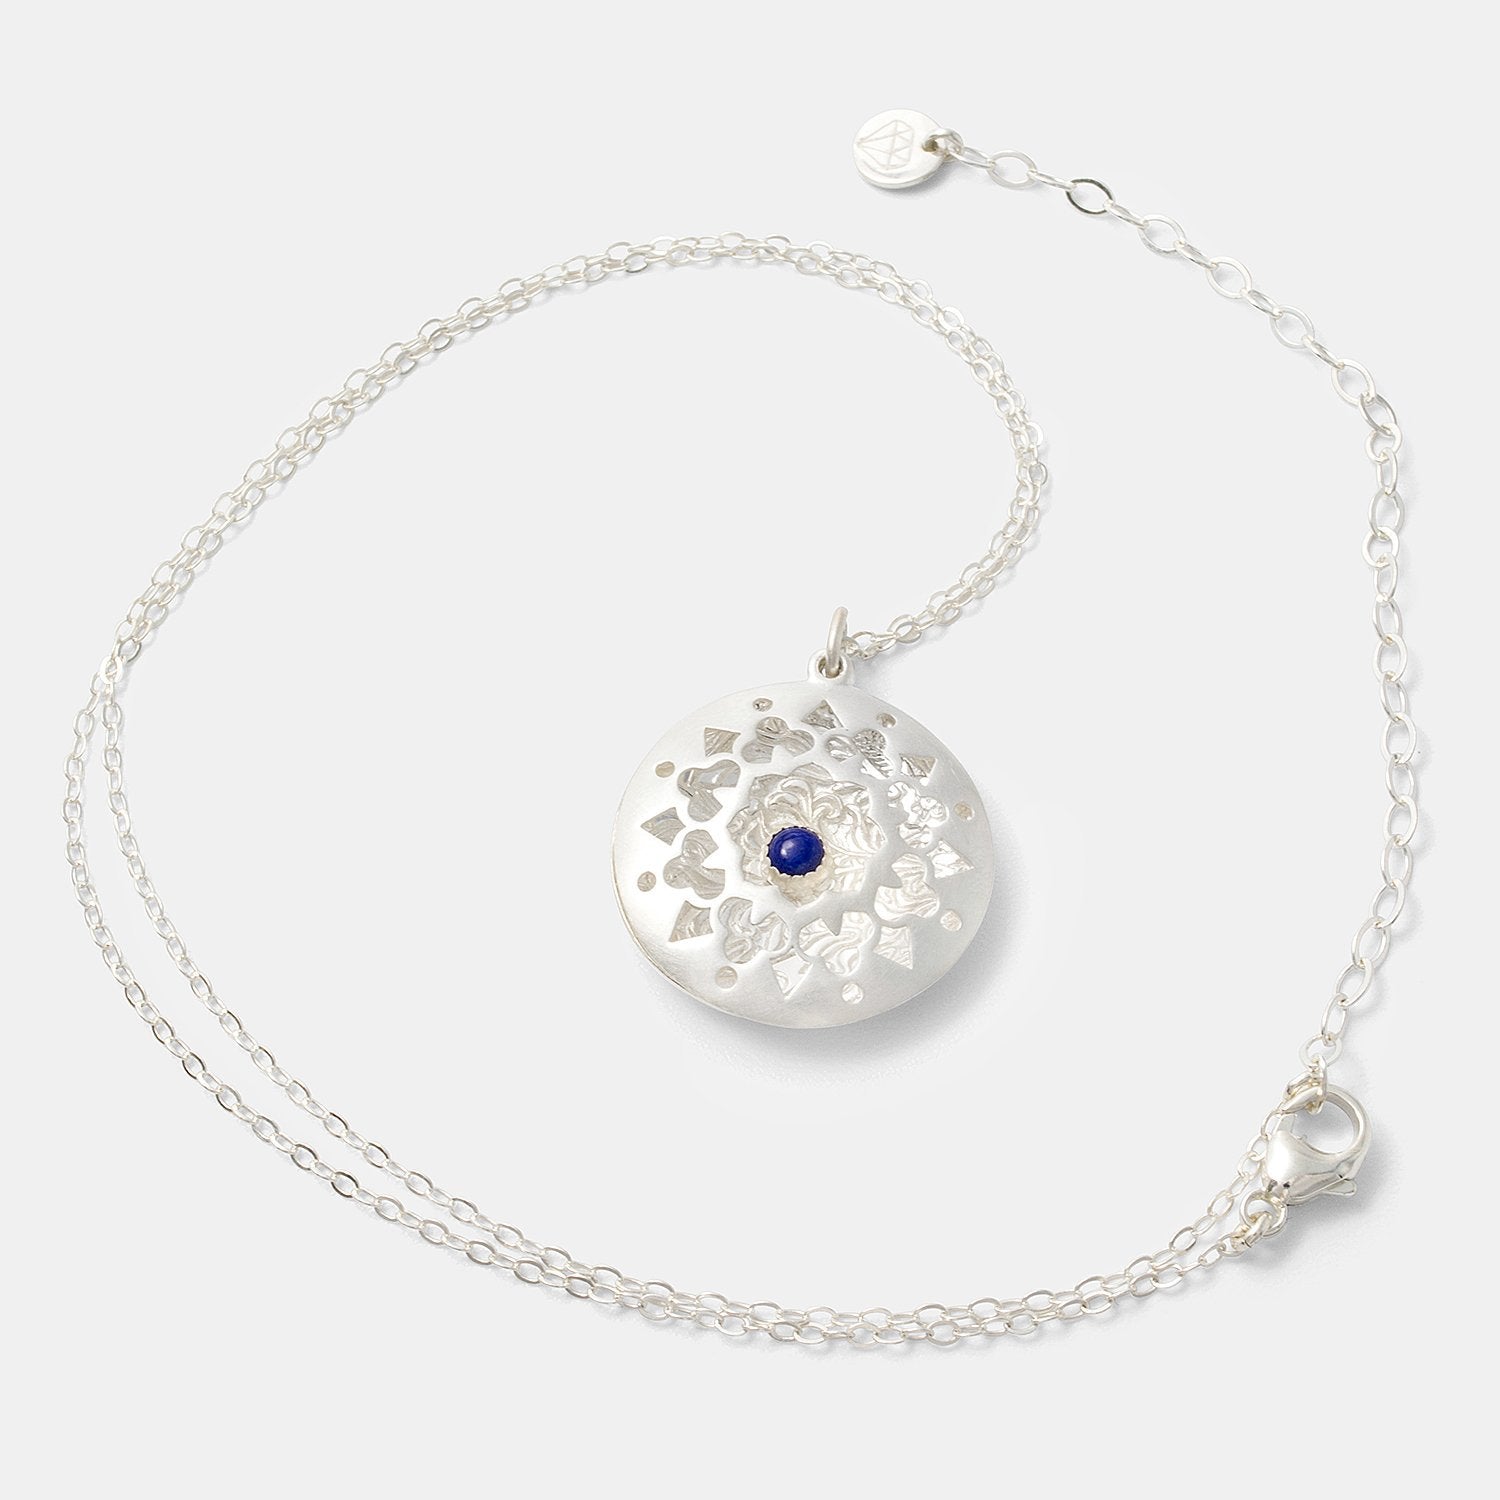 Mandala pendant with lapis lazuli - Simone Walsh Jewellery Australia